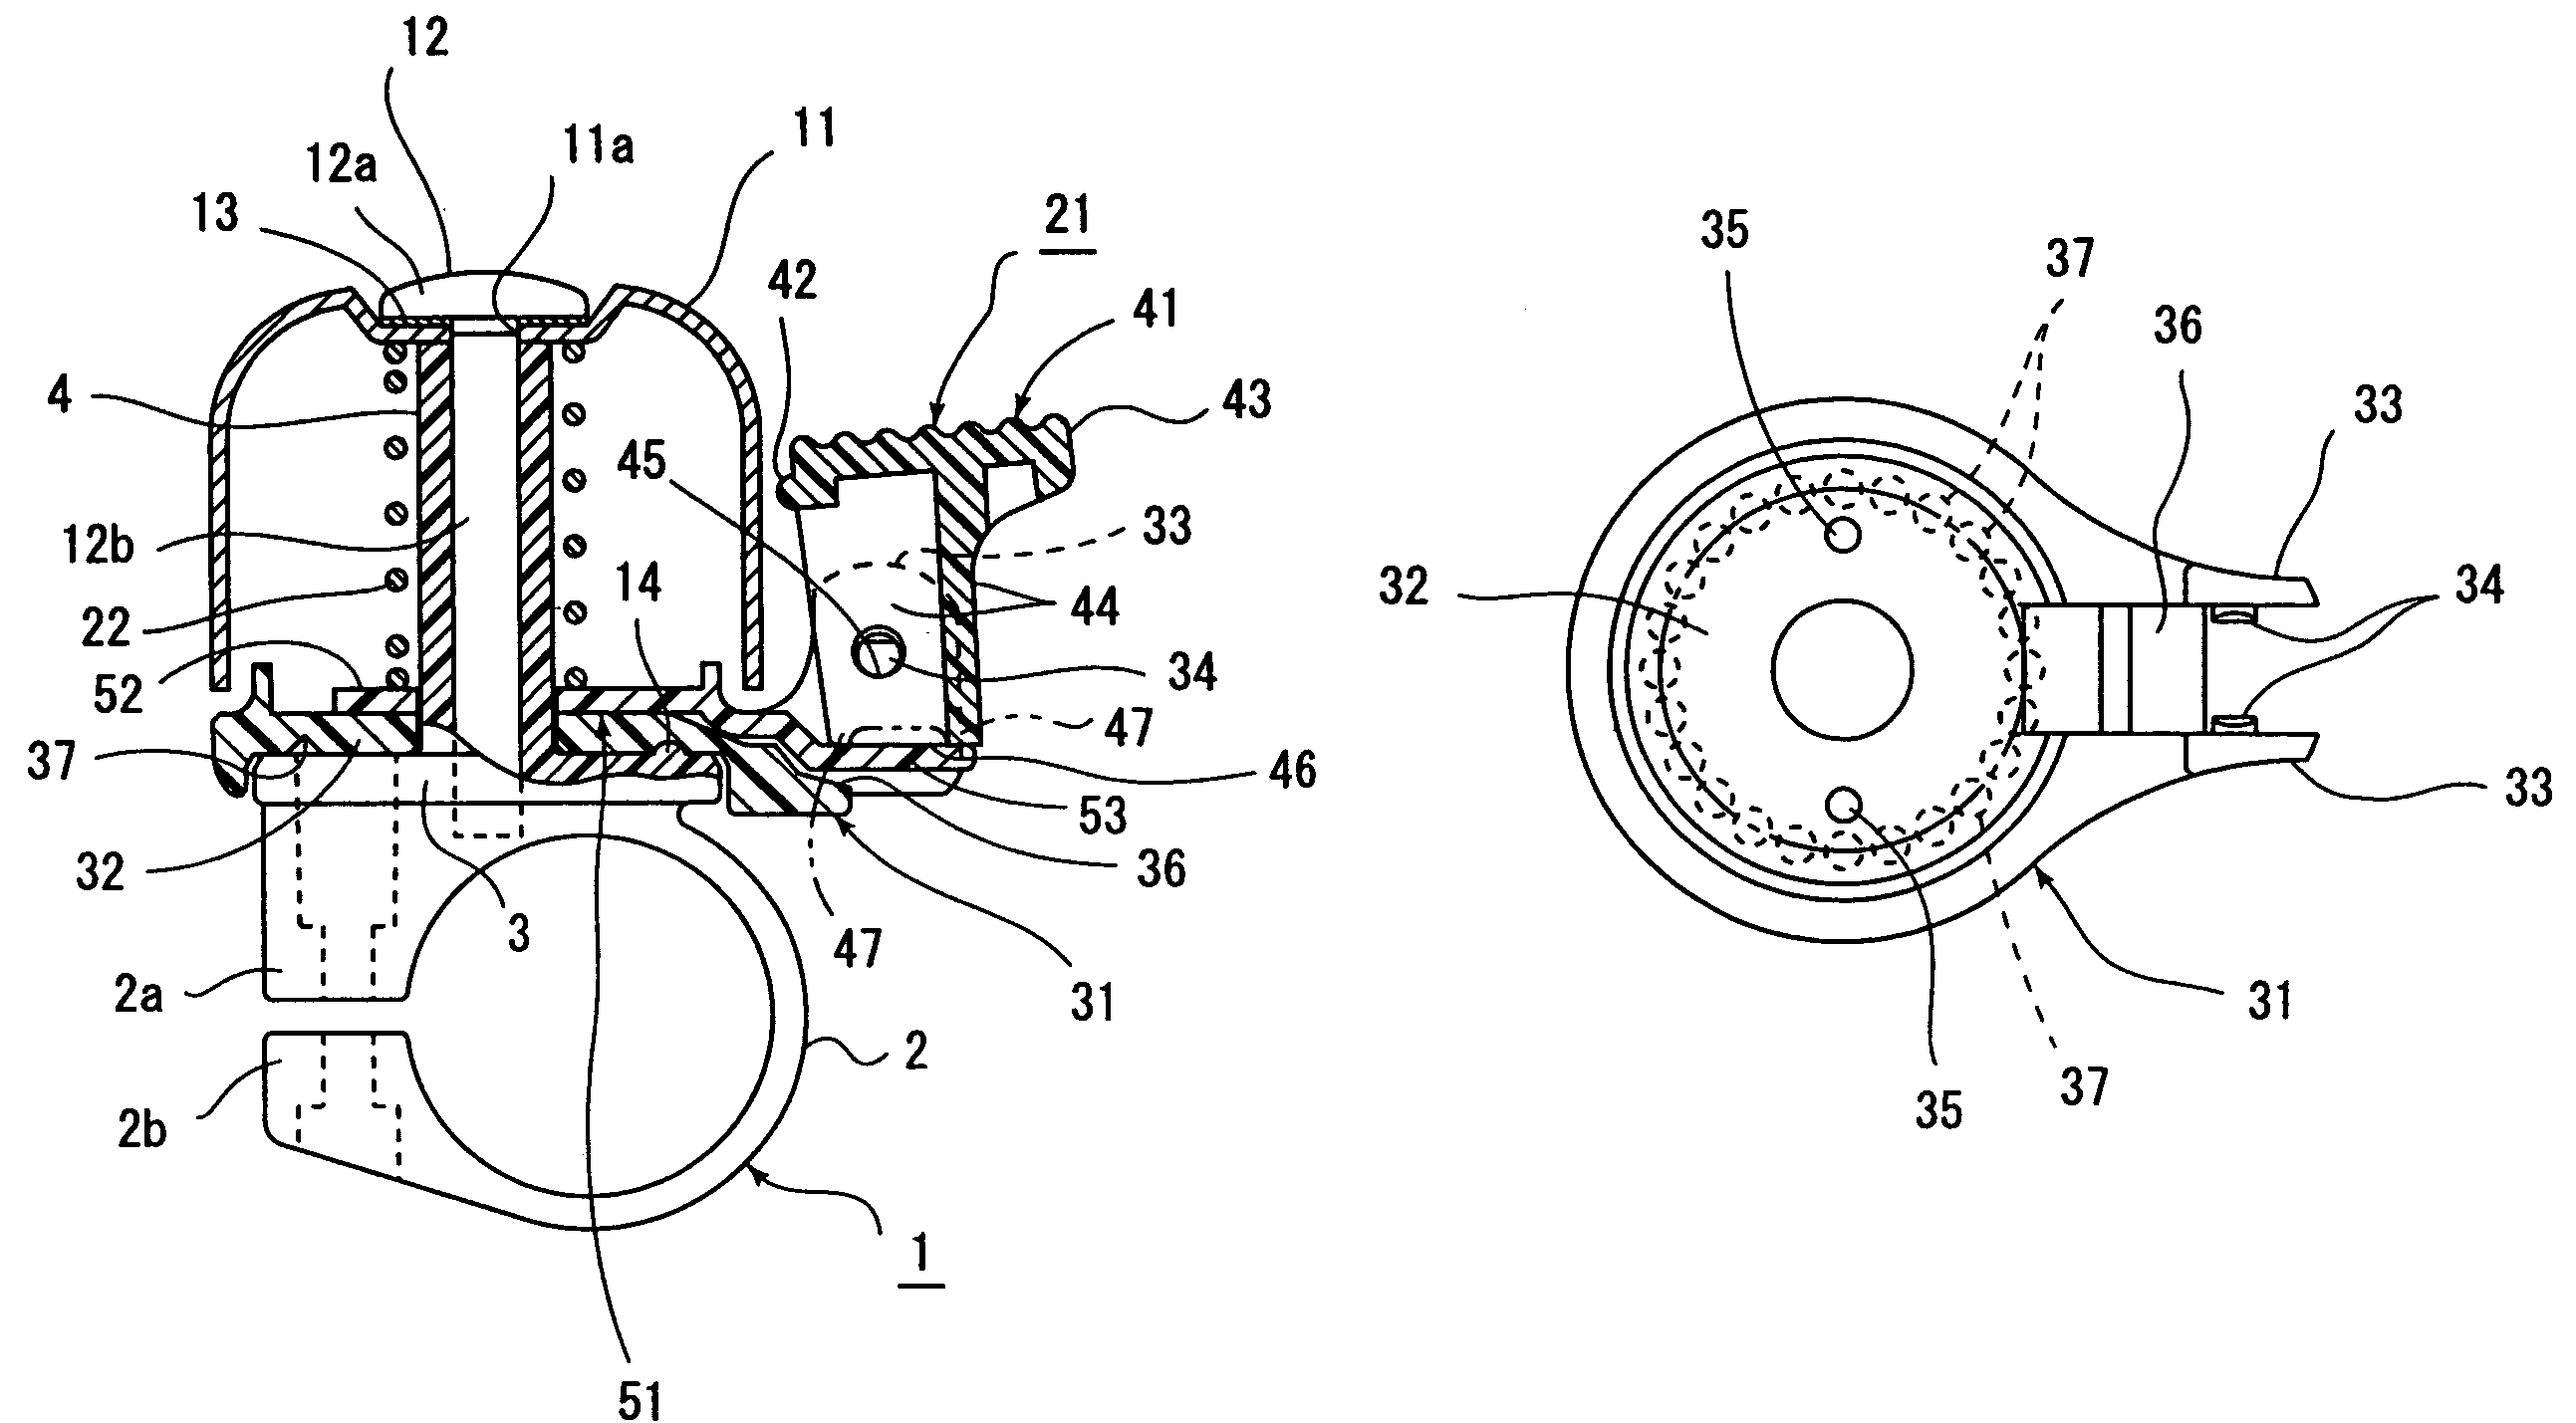 Striker mechanism for bell unit